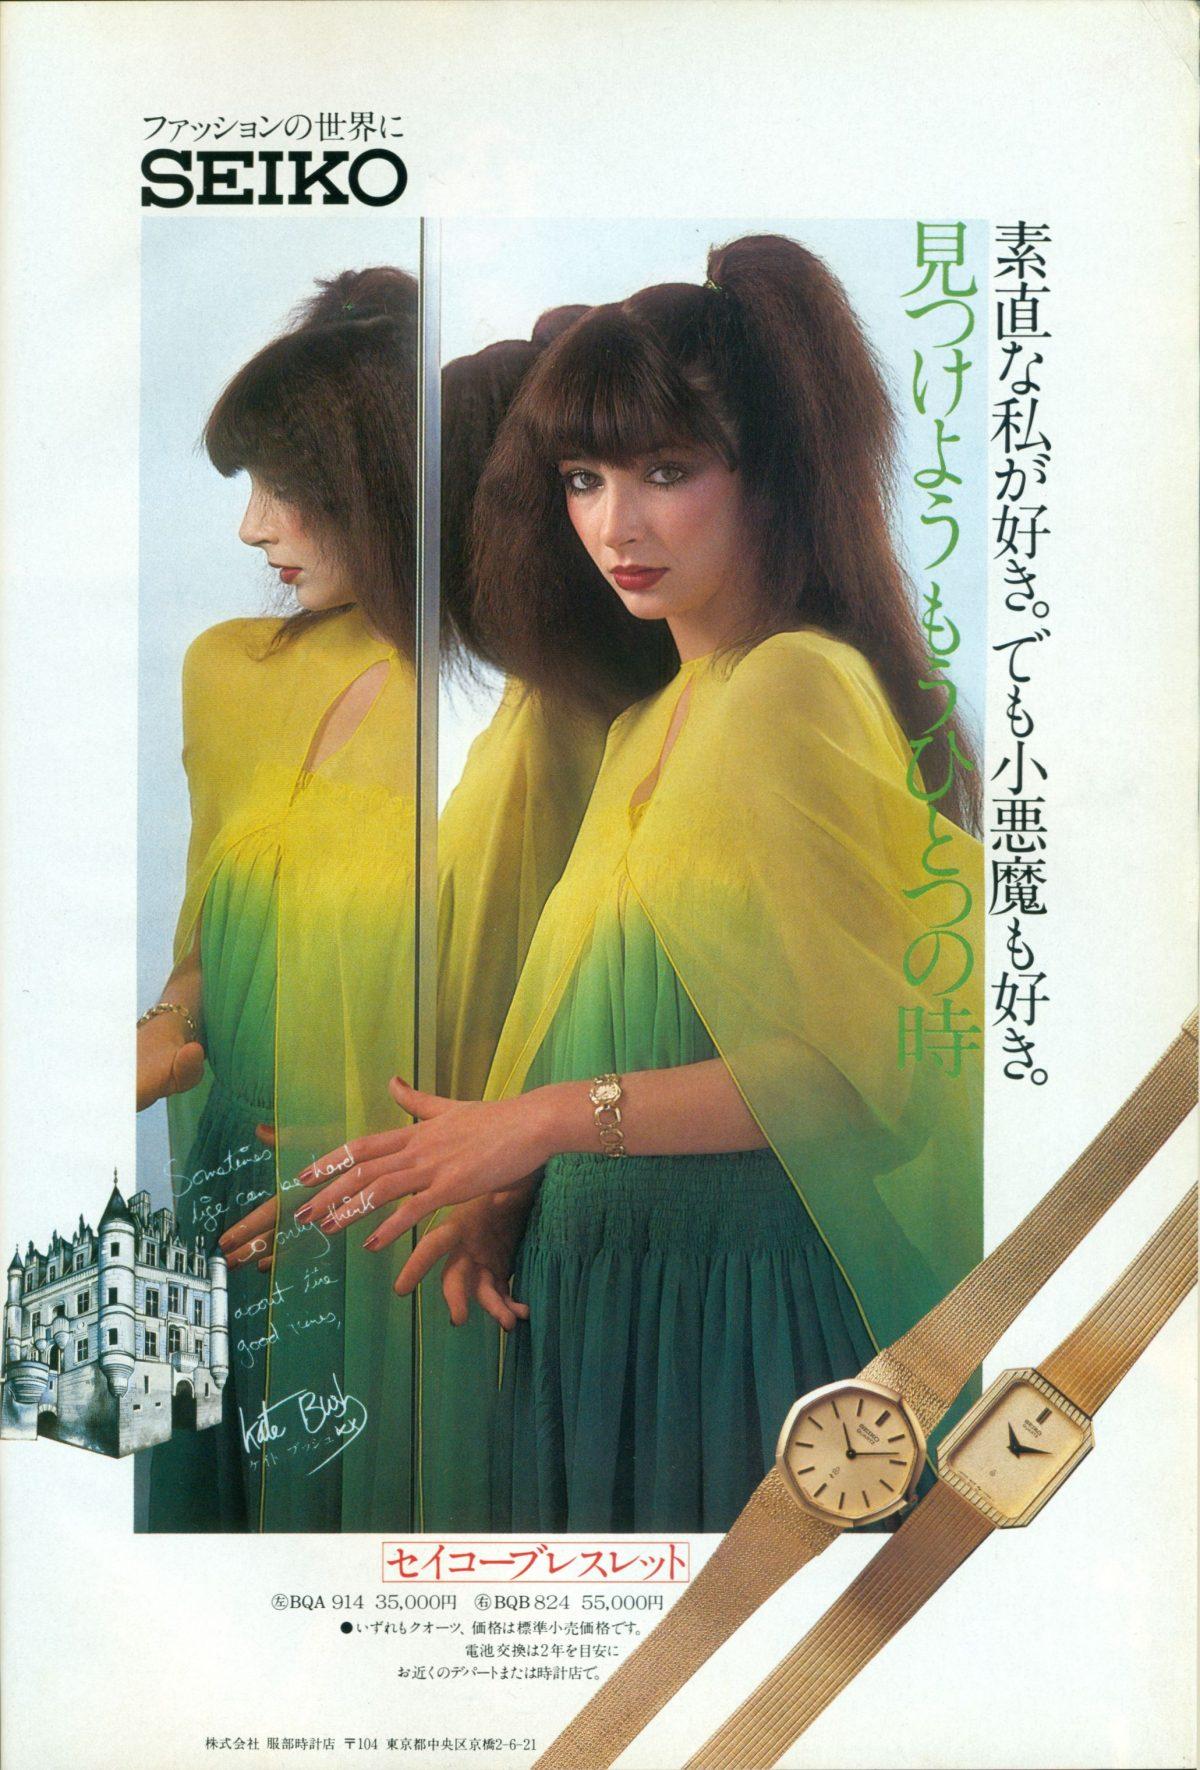 En 1978, Kate Bush Vendu Seiko Montres au Japon